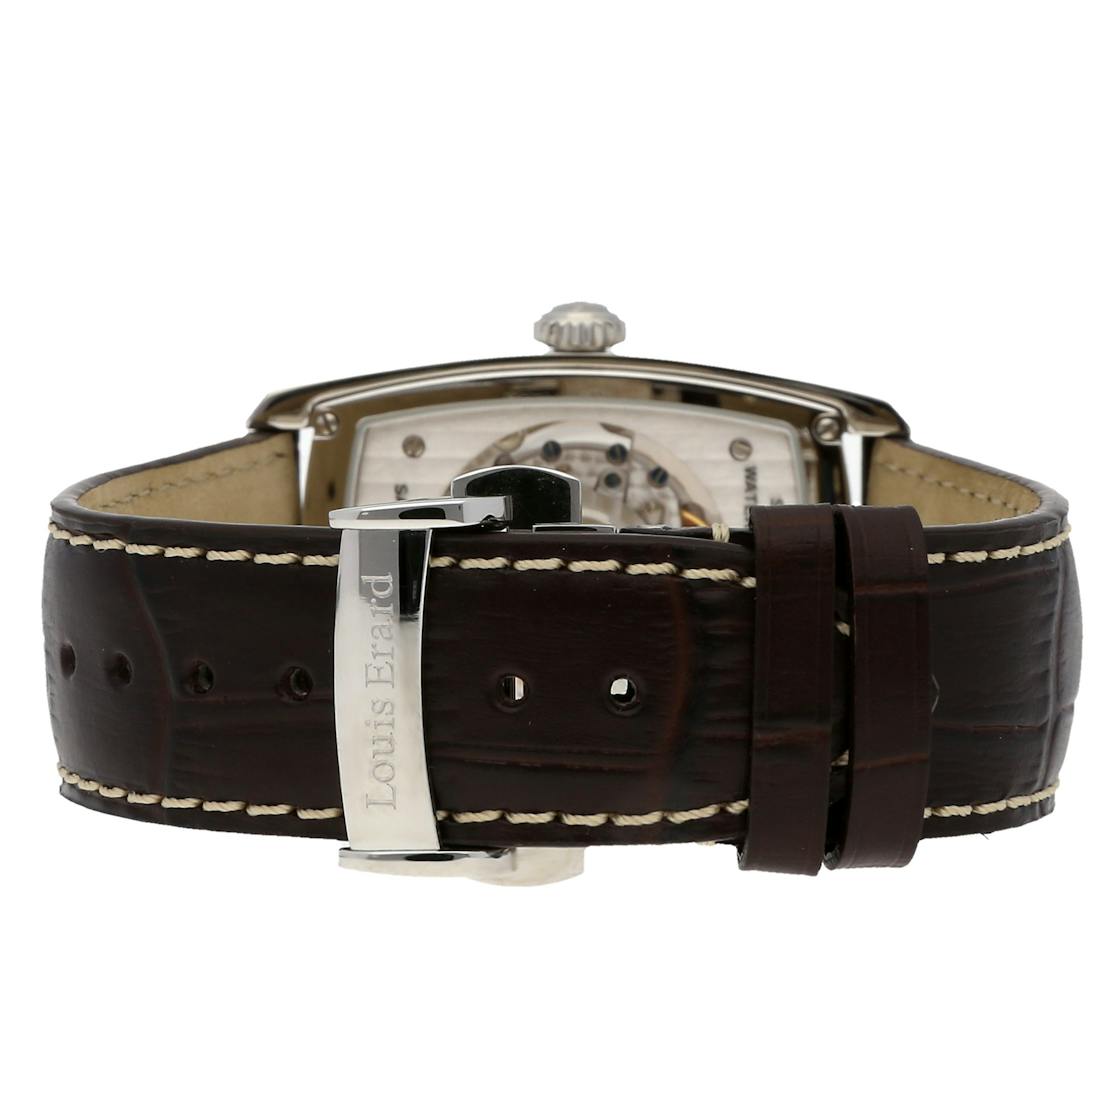 Louis Erard Automatic Watch 1931 GMT Luminous 82224AA01.BDC51